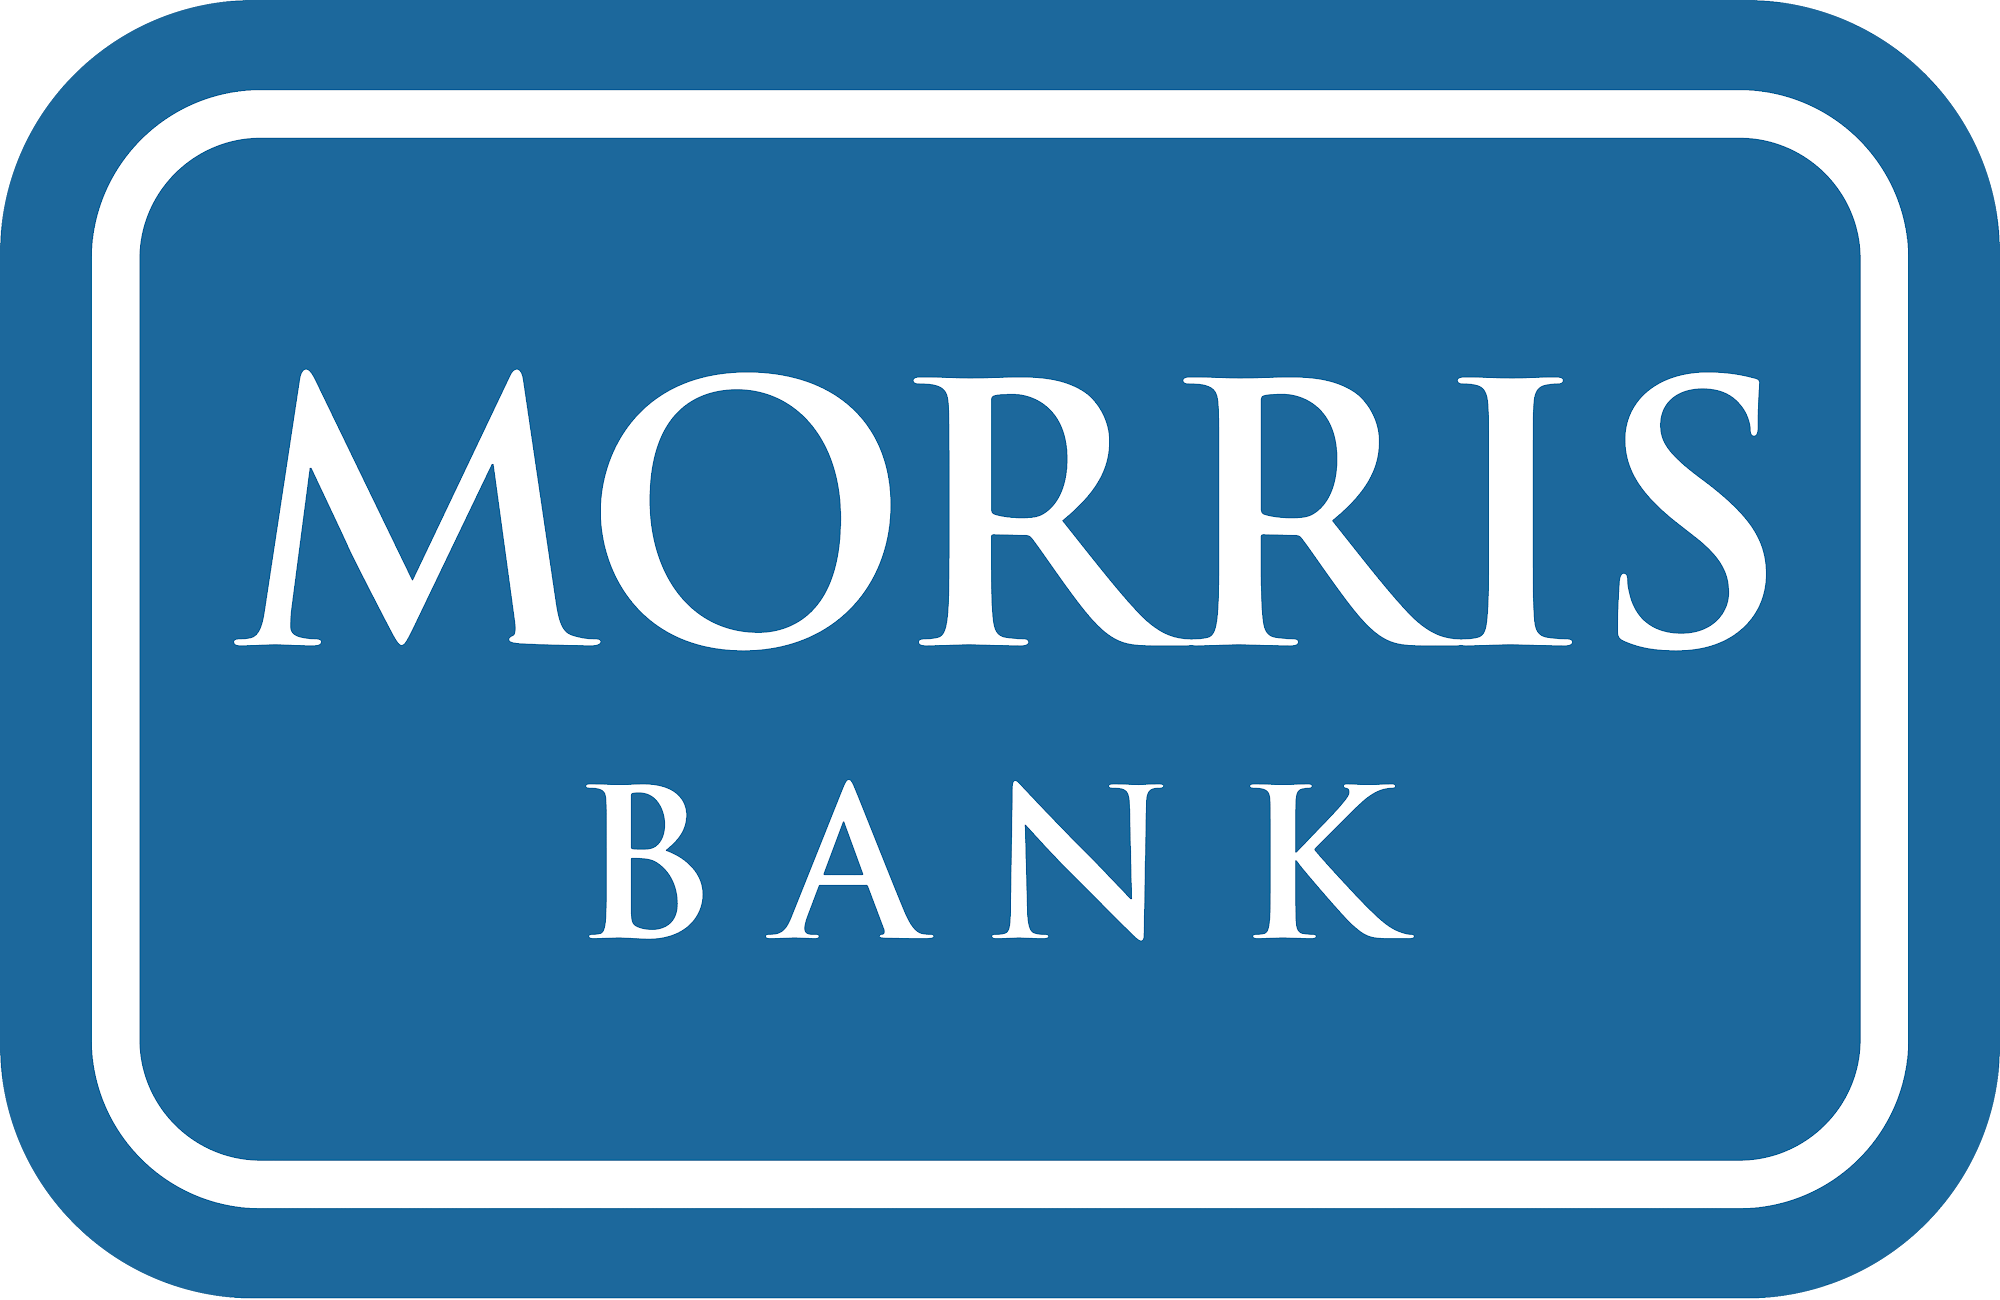 Morris Bank